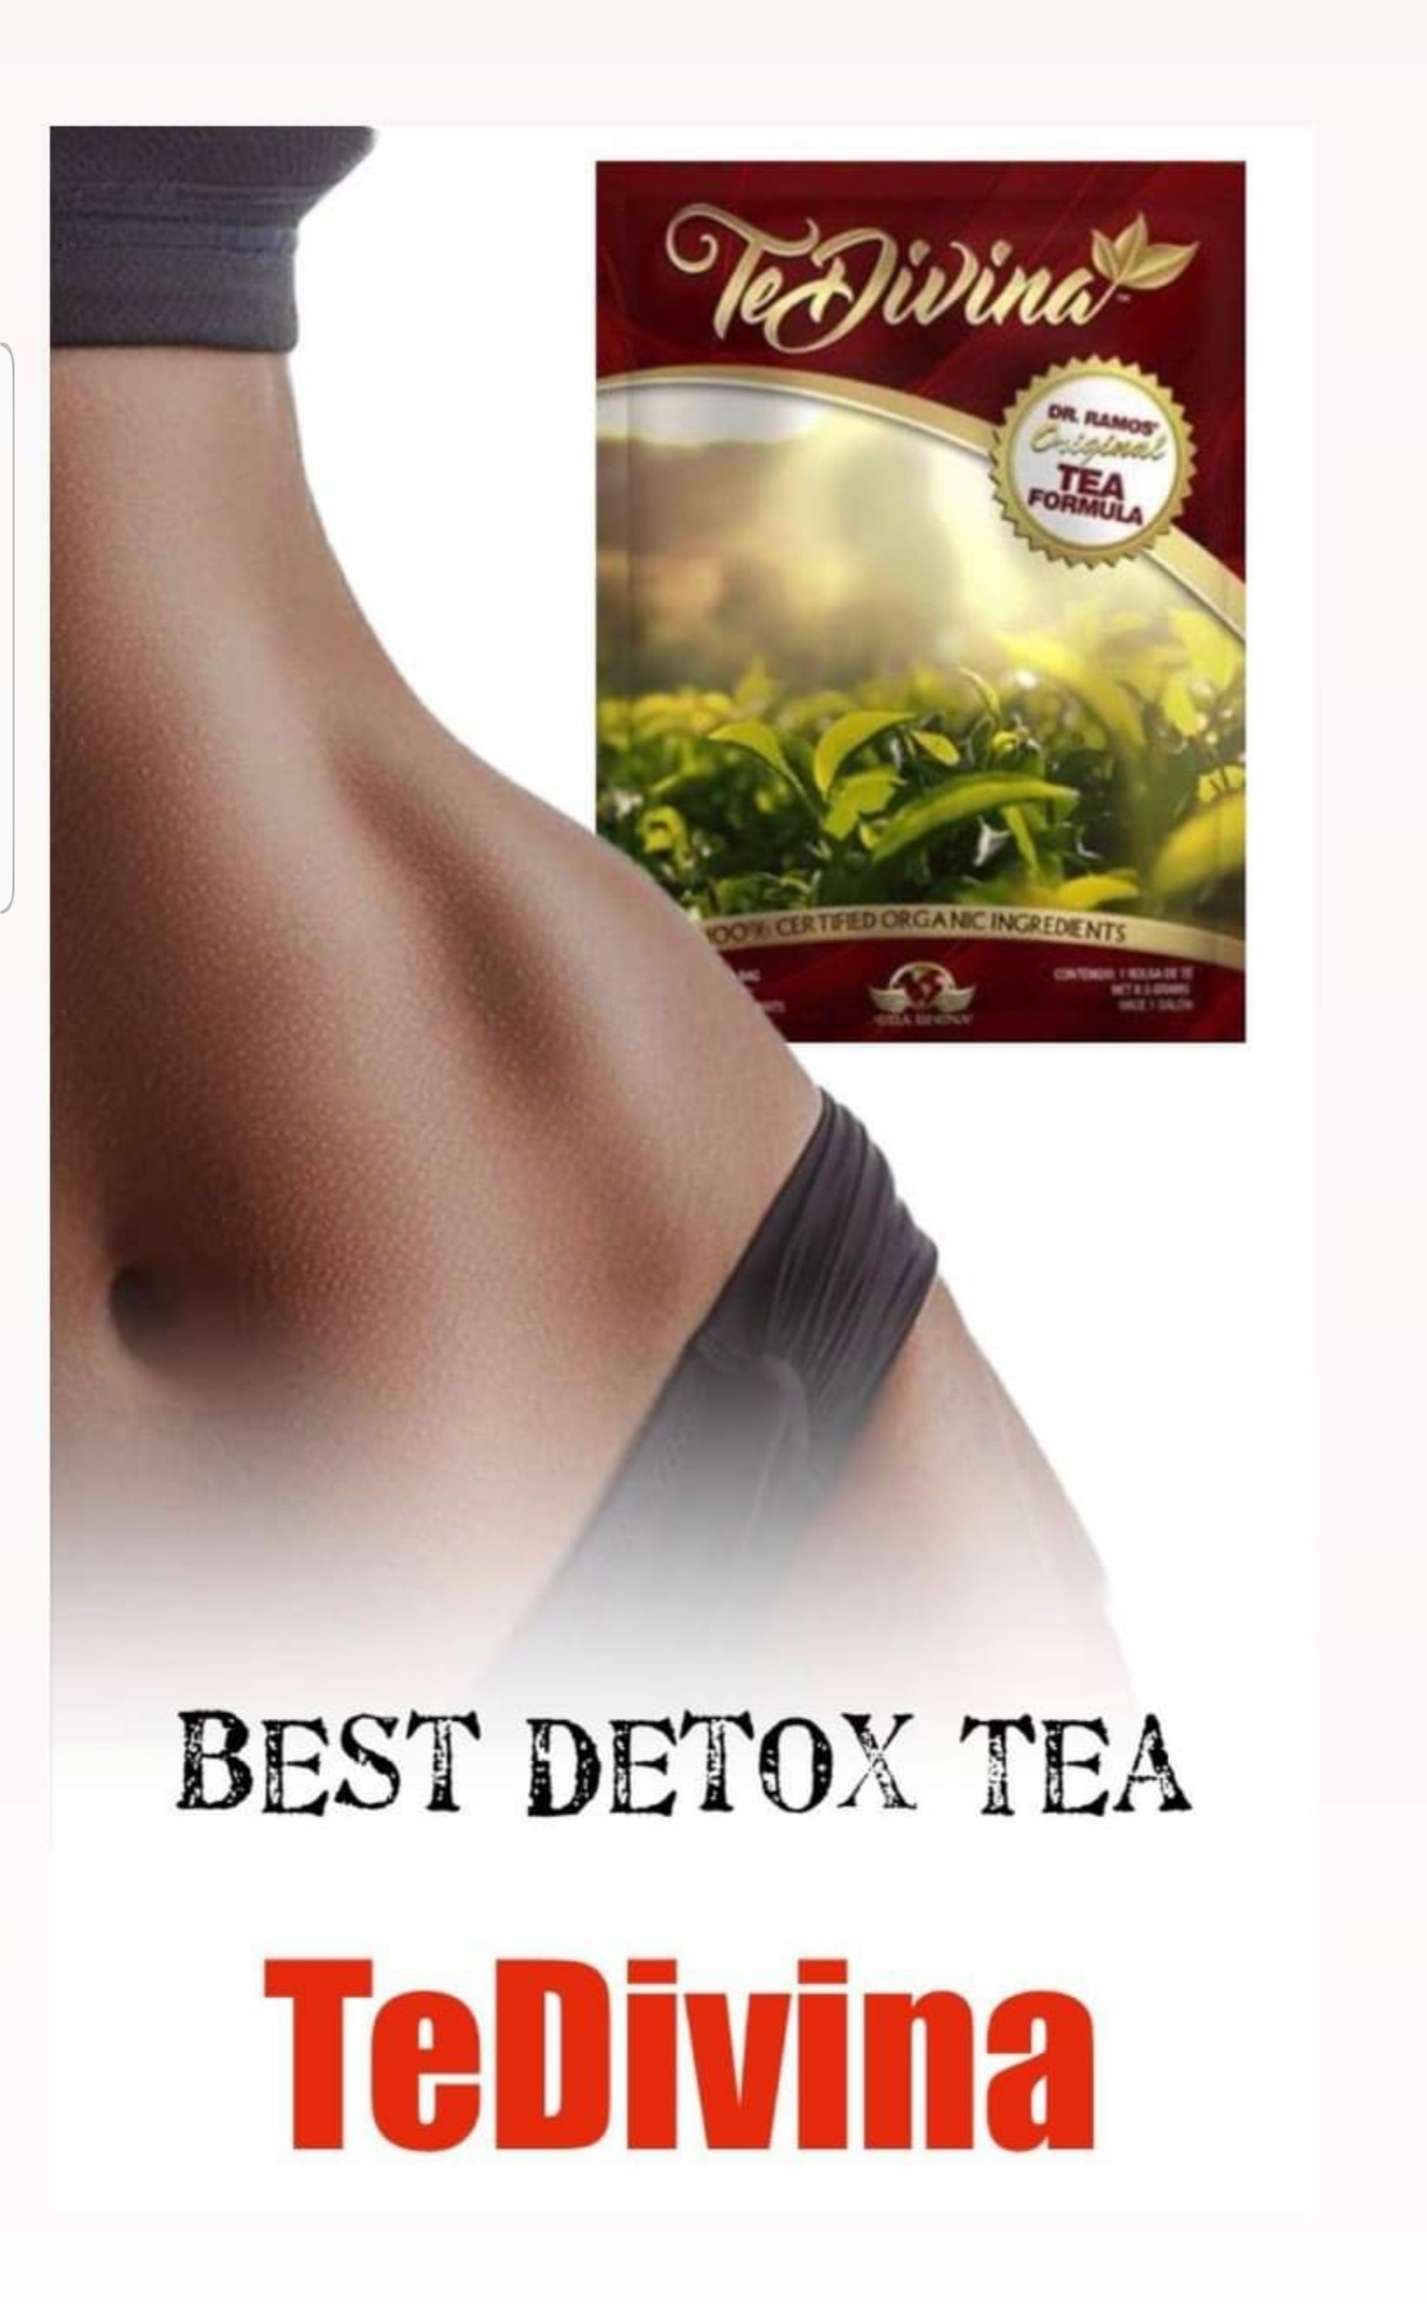 Weight loss / Flat tummy / Cleanse Tea